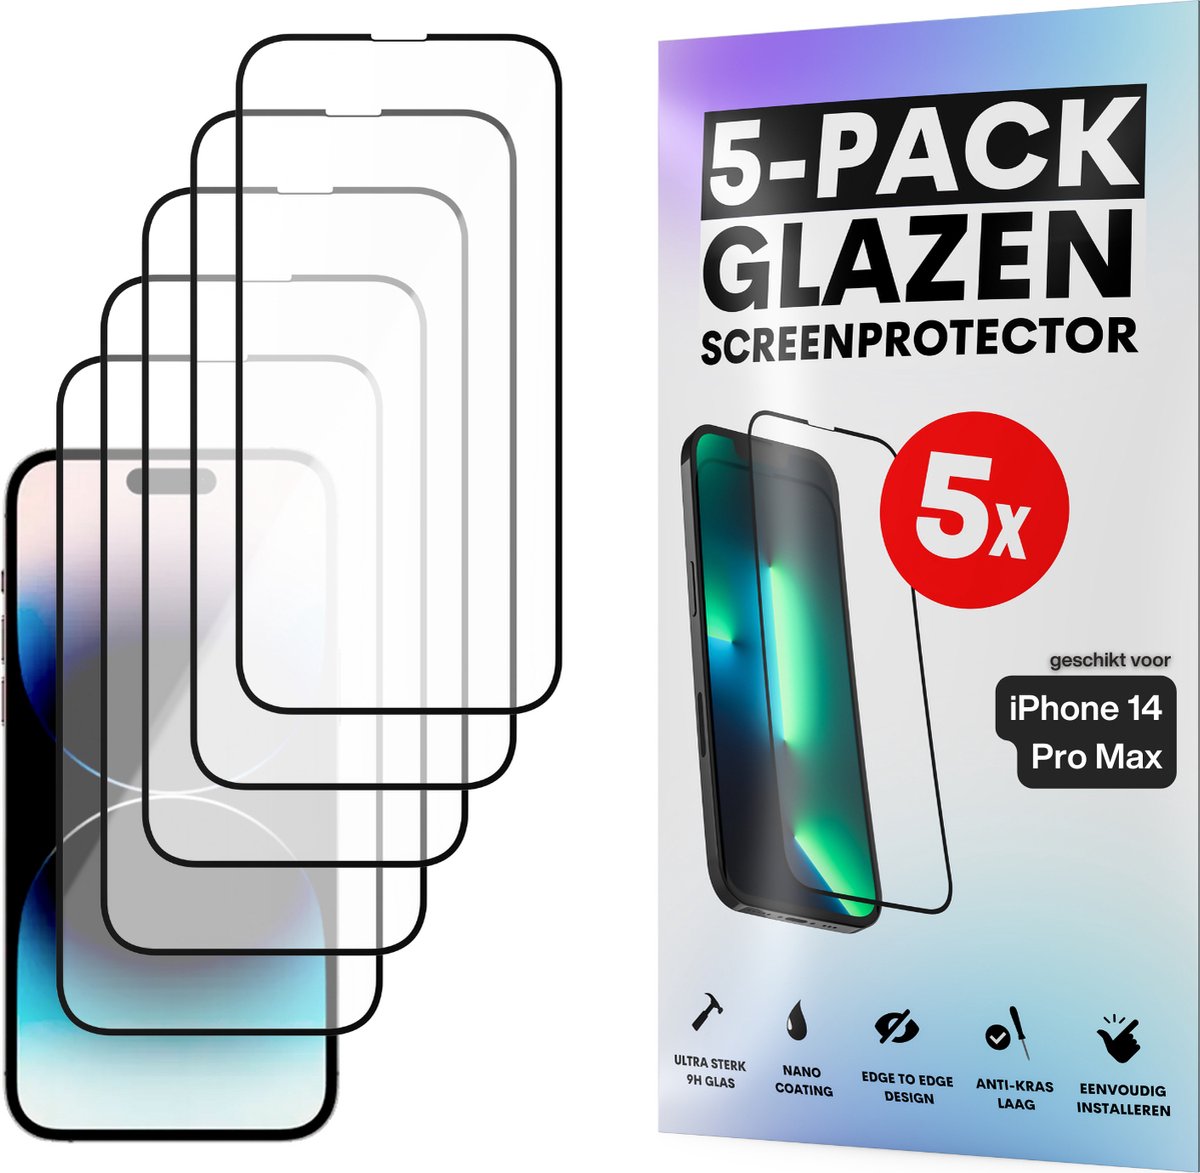 Screenprotector - Geschikt voor iPhone 14 Pro Max - Gehard Glas - Full Cover Tempered Glass - Case Friendly - 5 Pack